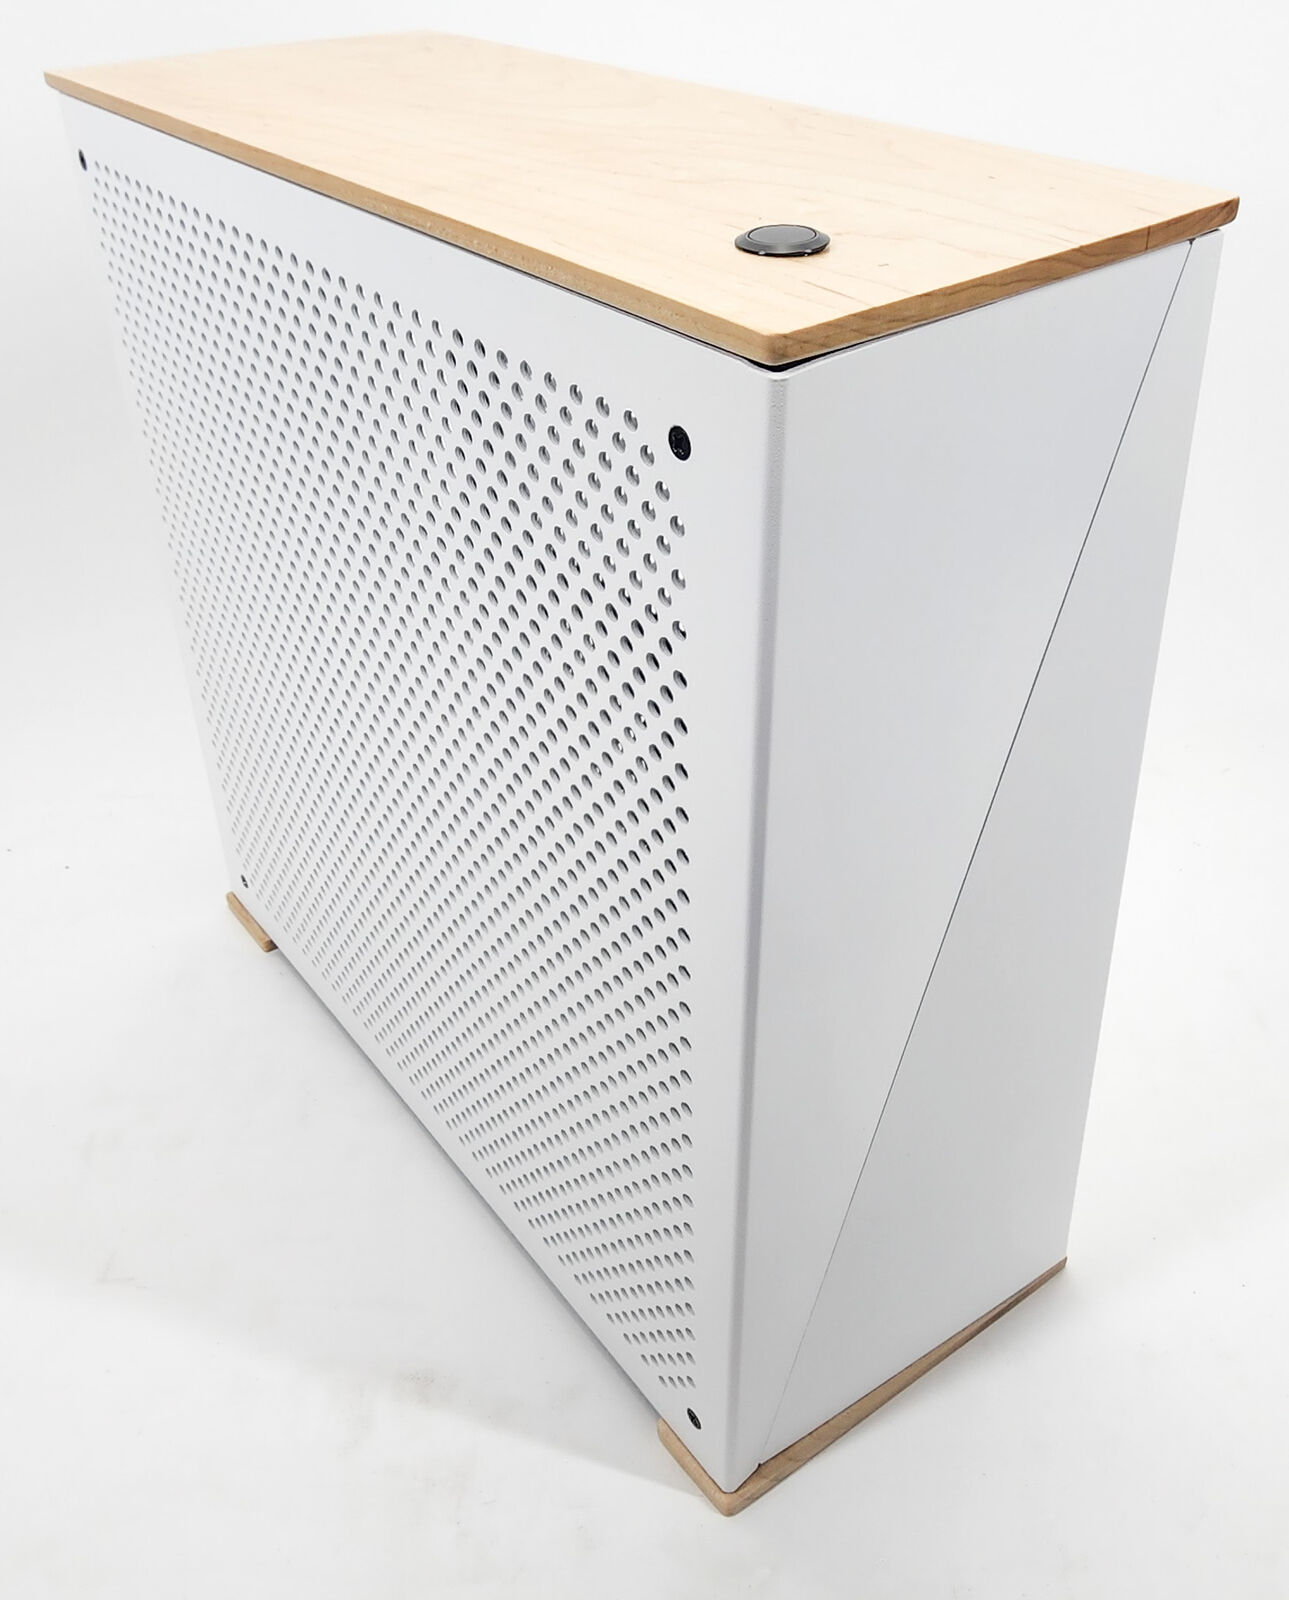 Artesian Builds Custom Pluto White Maple Wood SFF Mini ITX Computer Case